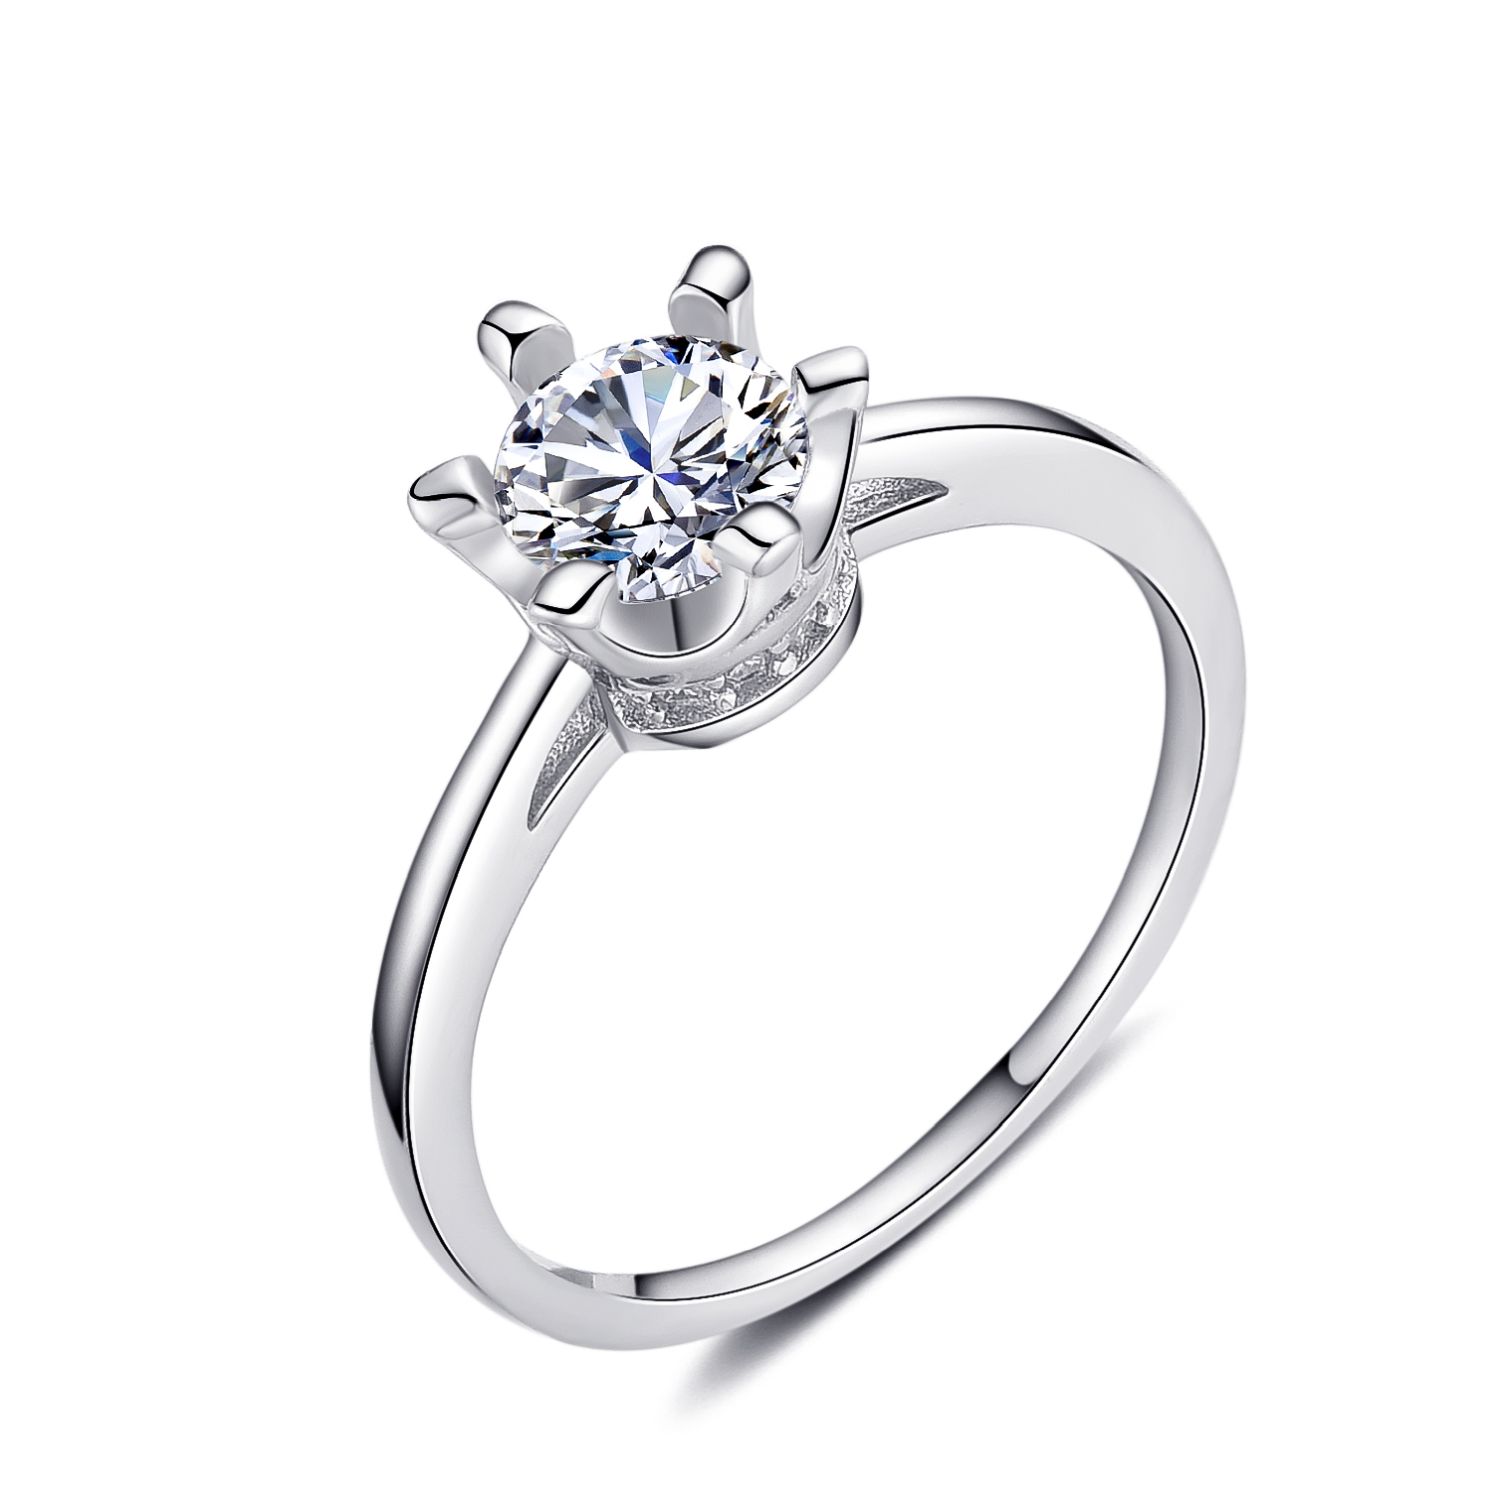 MOISS Moiss stříbrný prsten KORUNKA R0000546 Velikost 53 mm R0000548